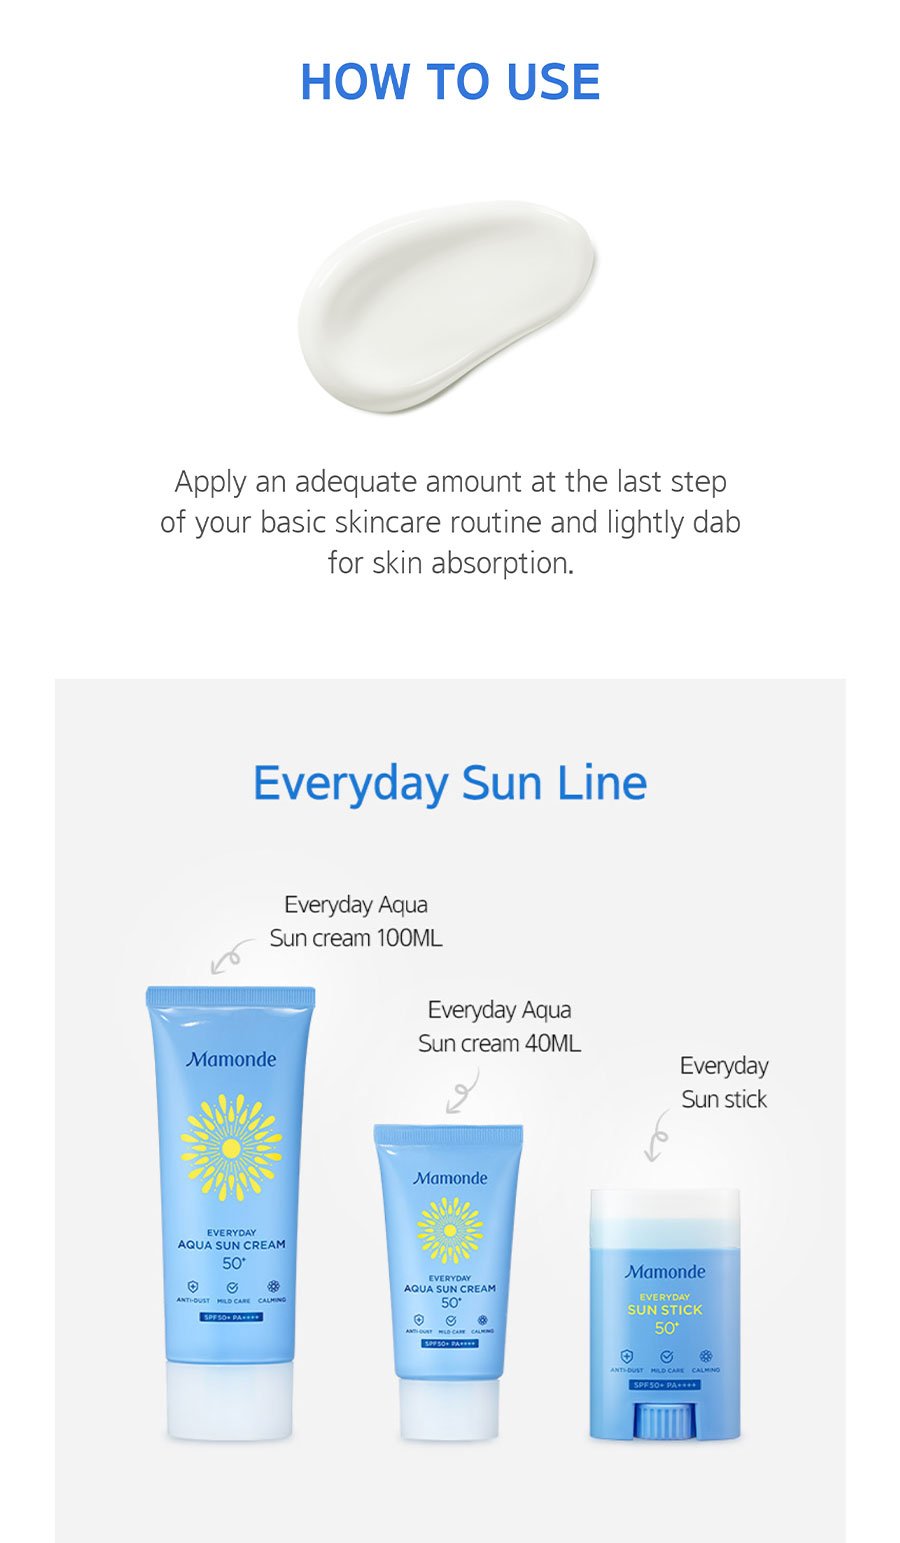 Everyday Aqua Sun Cream - How to use